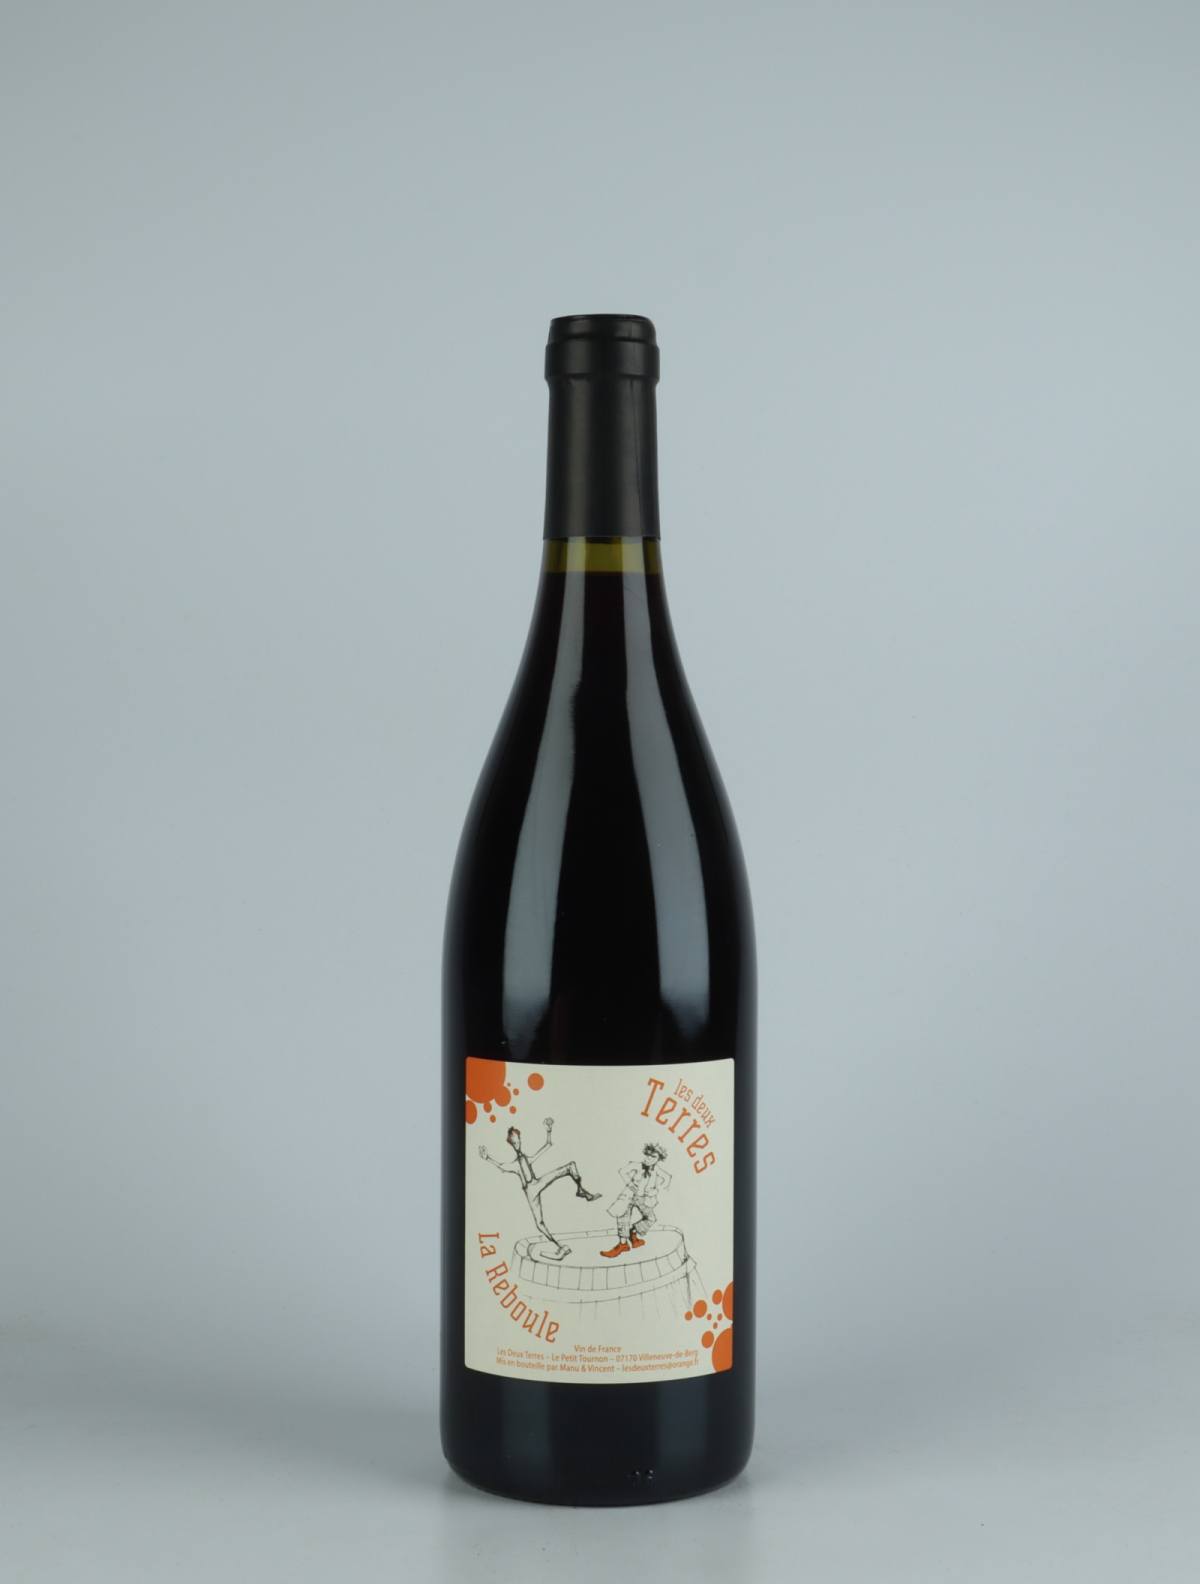 A bottle 2021 Reboule Red wine from Les Deux Terres, Ardèche in France